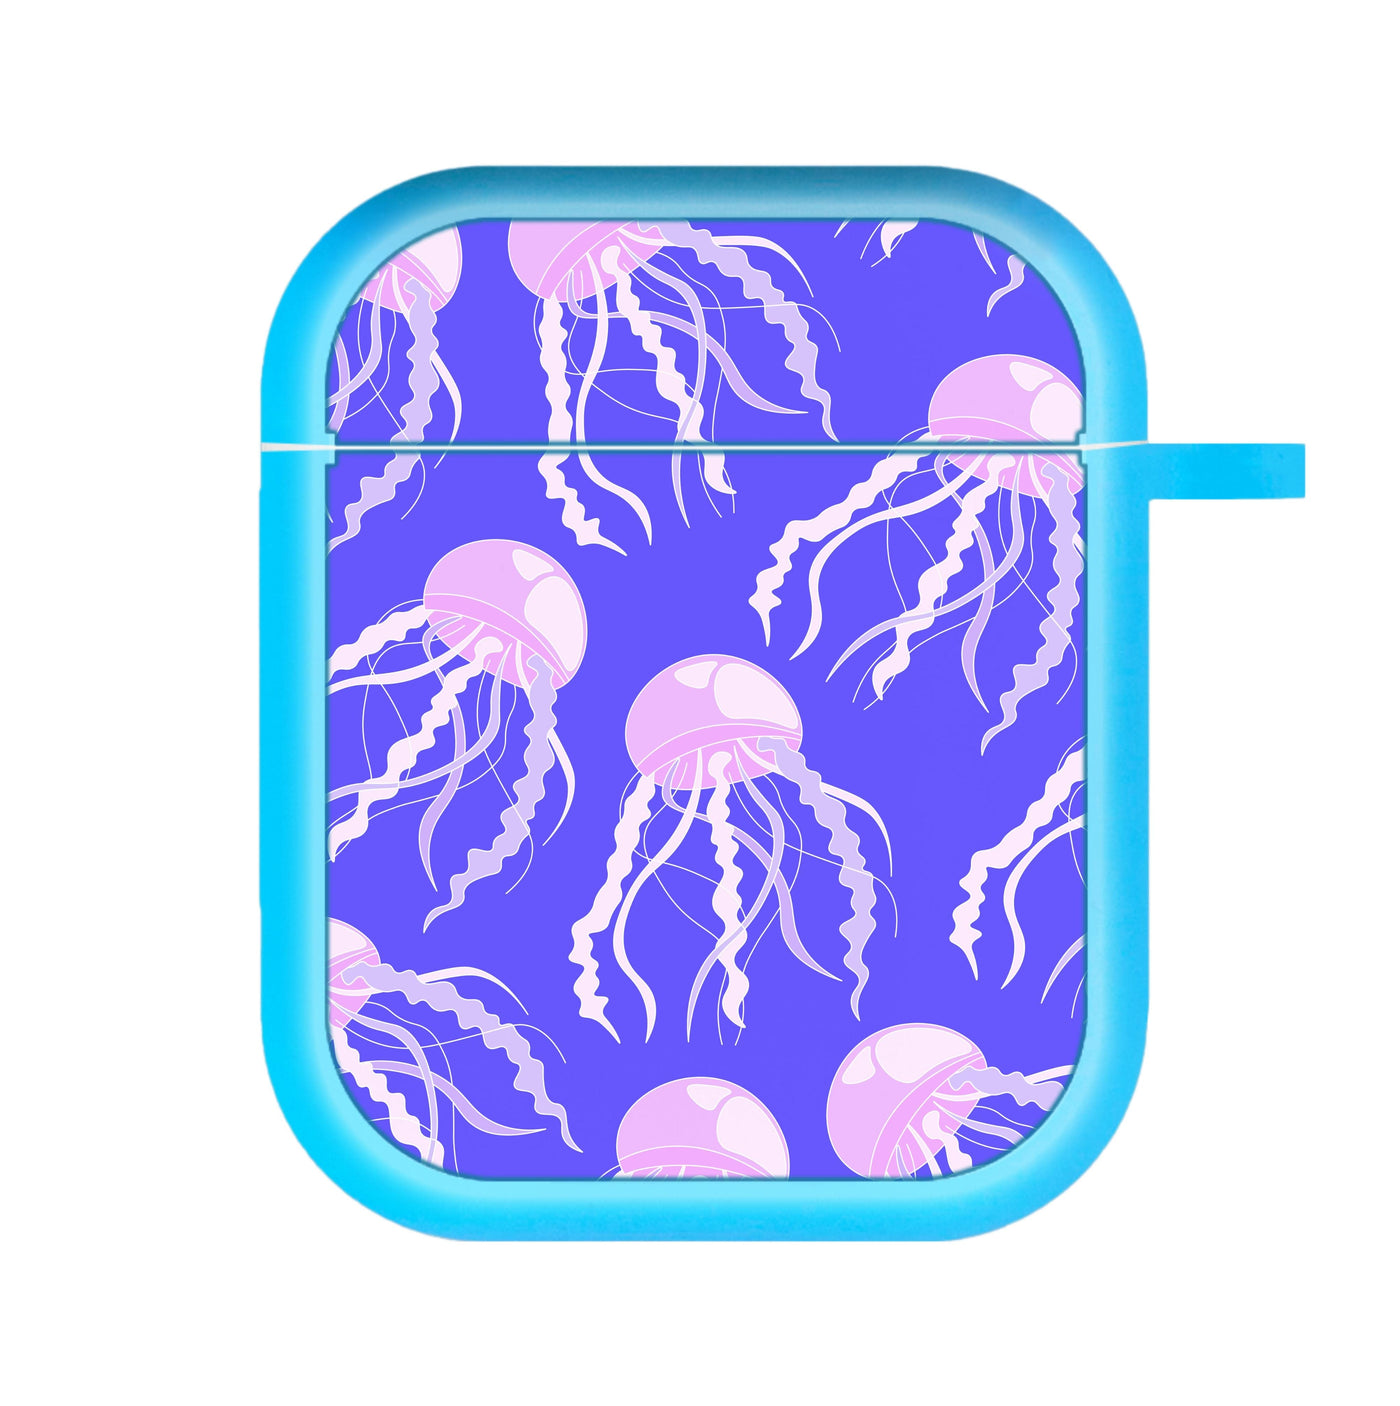 Jellyfish Pattern - Sealife AirPods Case